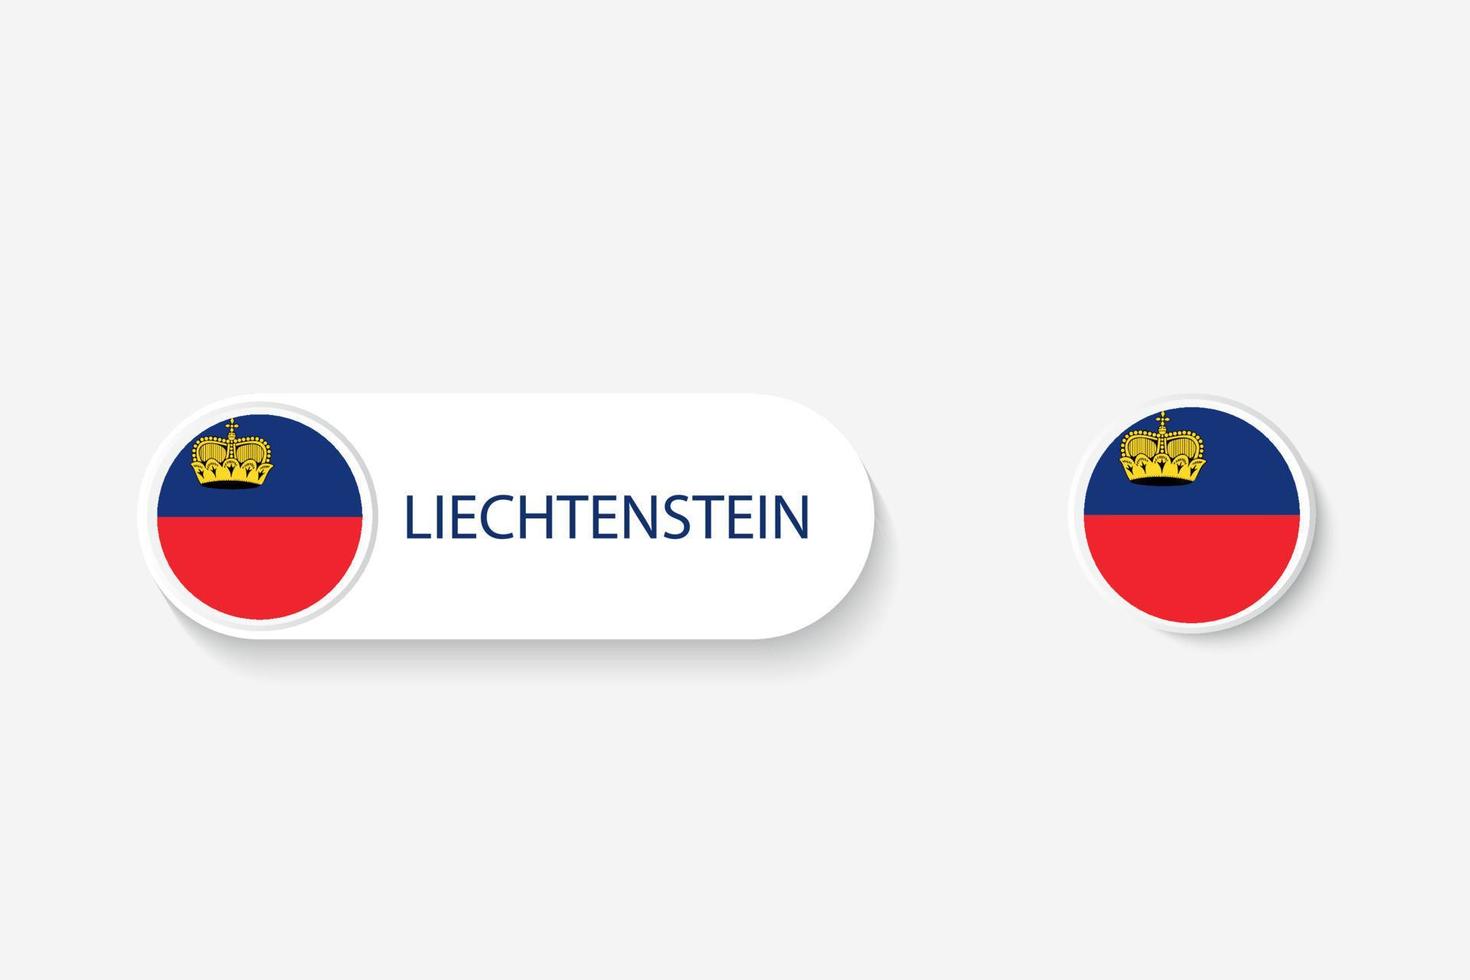 Liechtenstein-knopvlag in illustratie van ovaal gevormd met woord Liechtenstein. en knoopvlag liechtenstein. vector